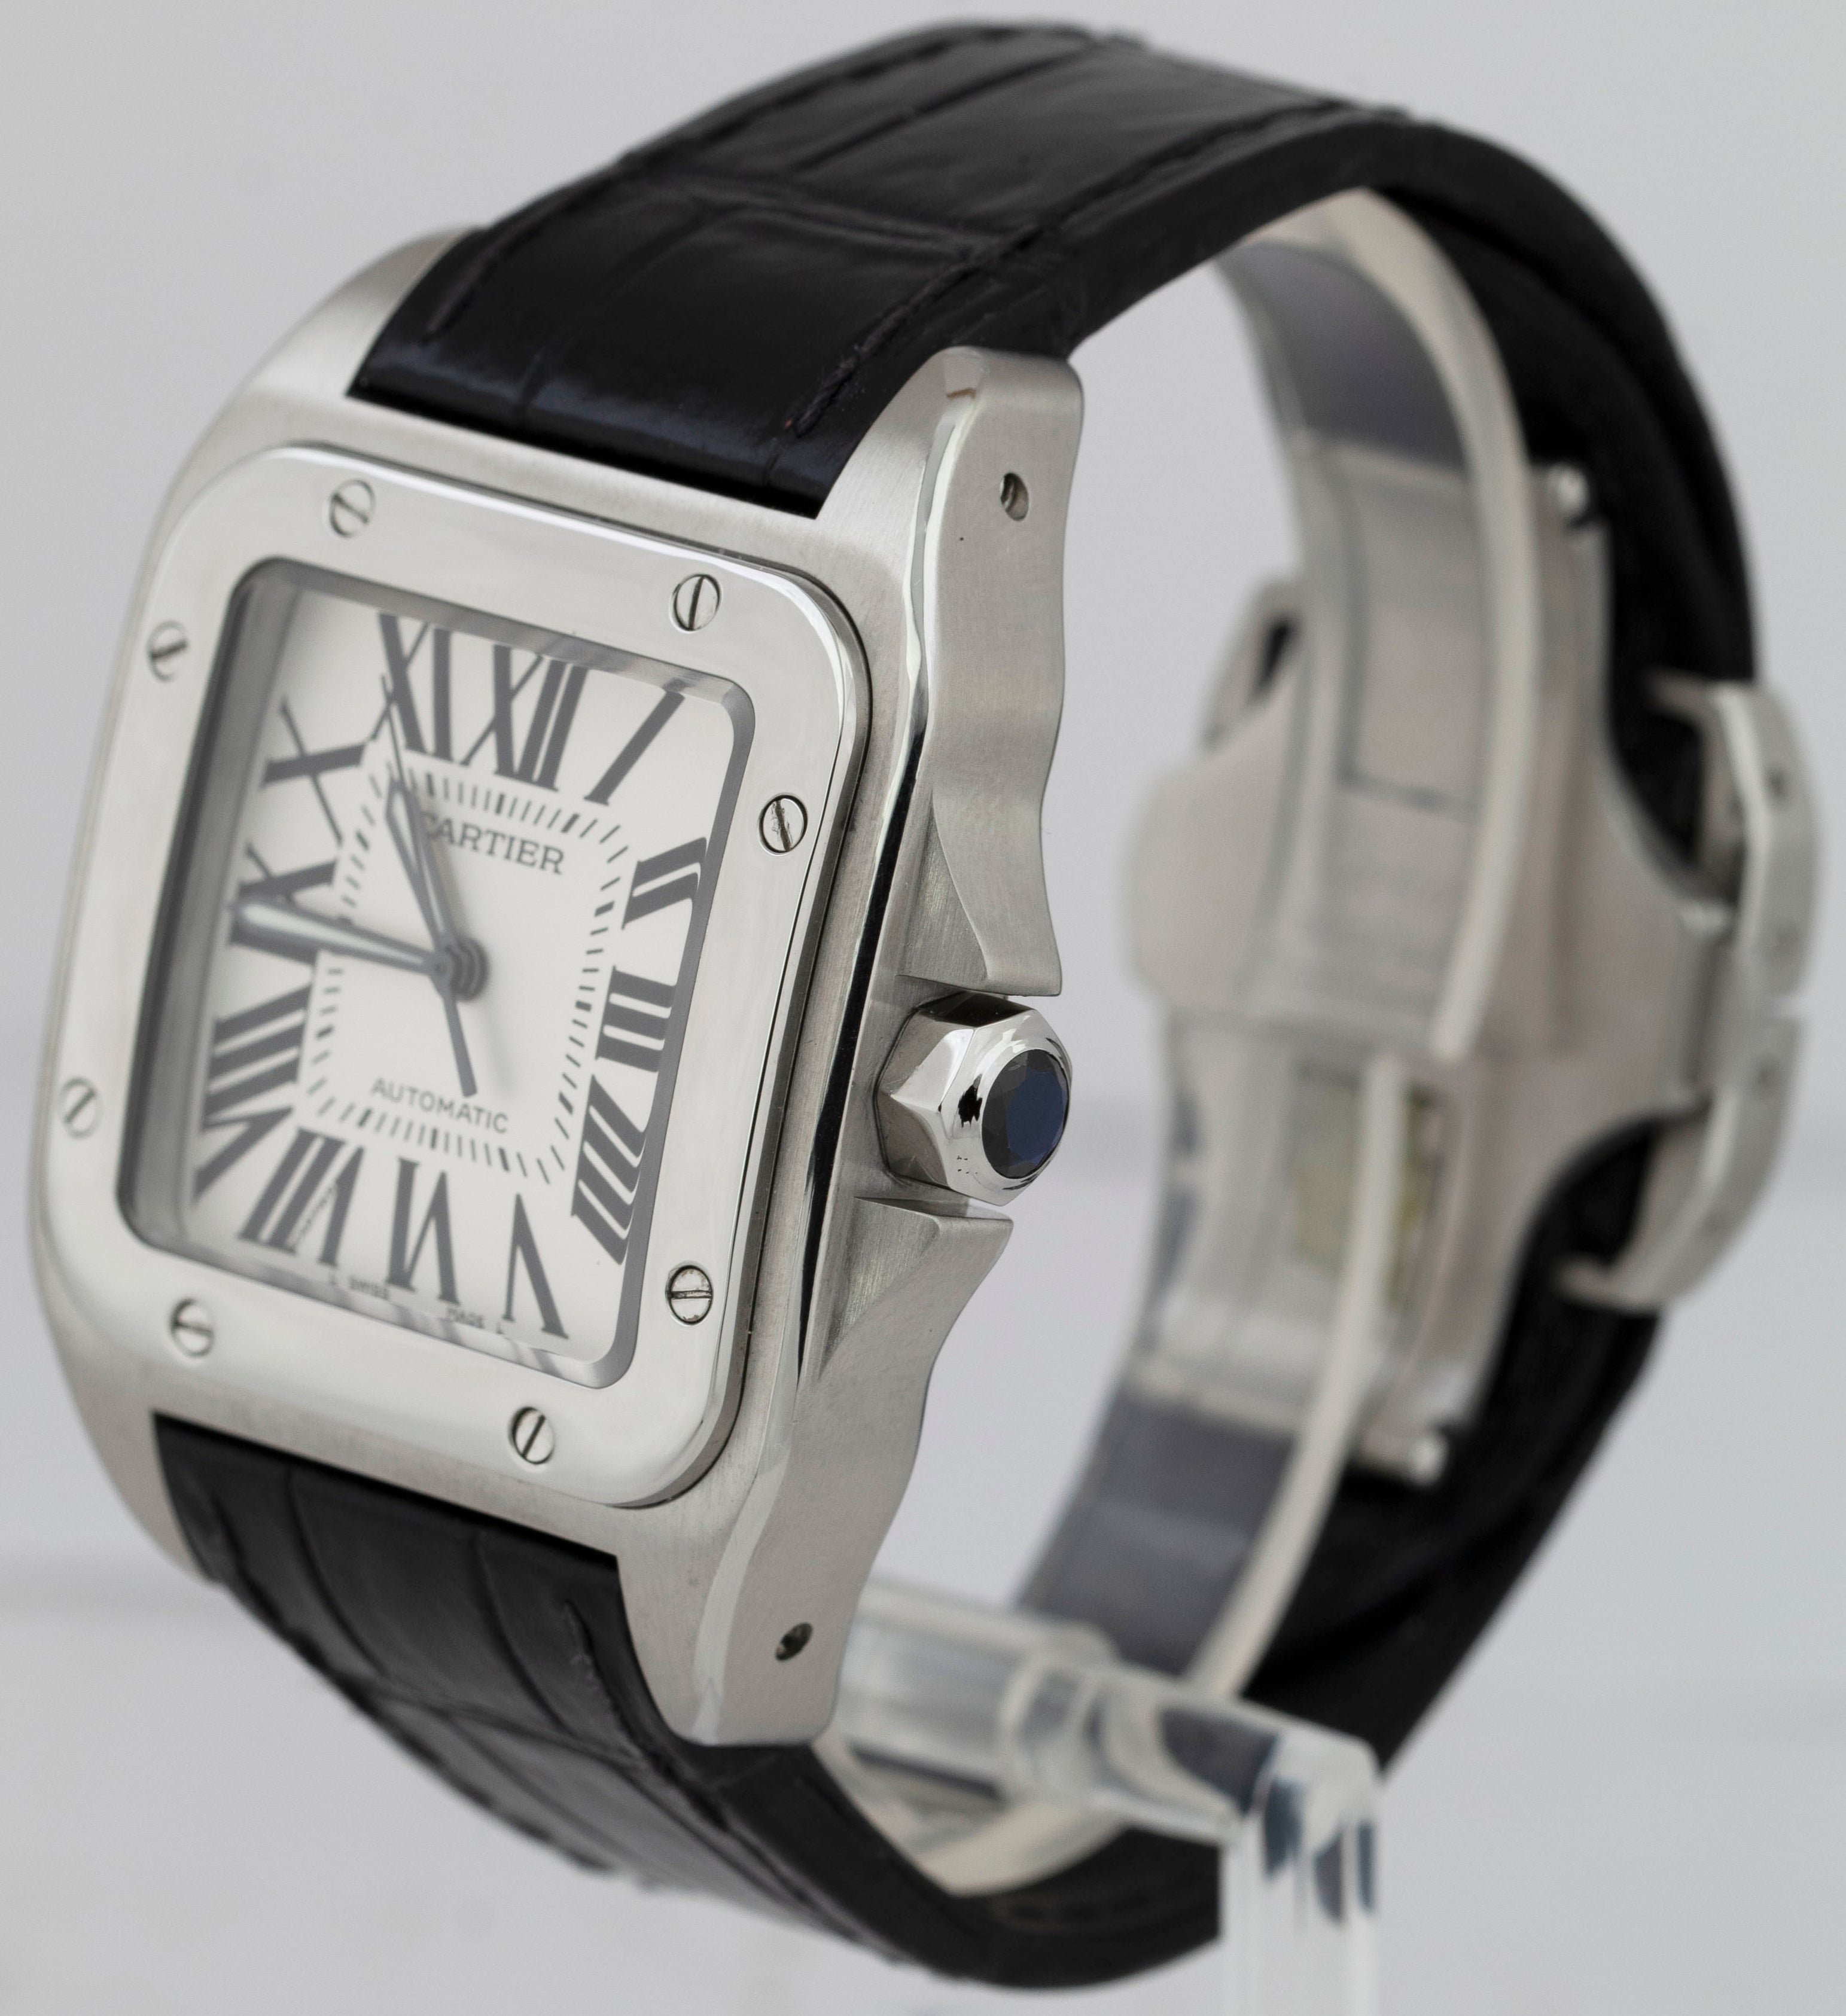 Cartier Santos 100 XL 38mm Stainless Steel White Roman Watch 2656 / W20073X8